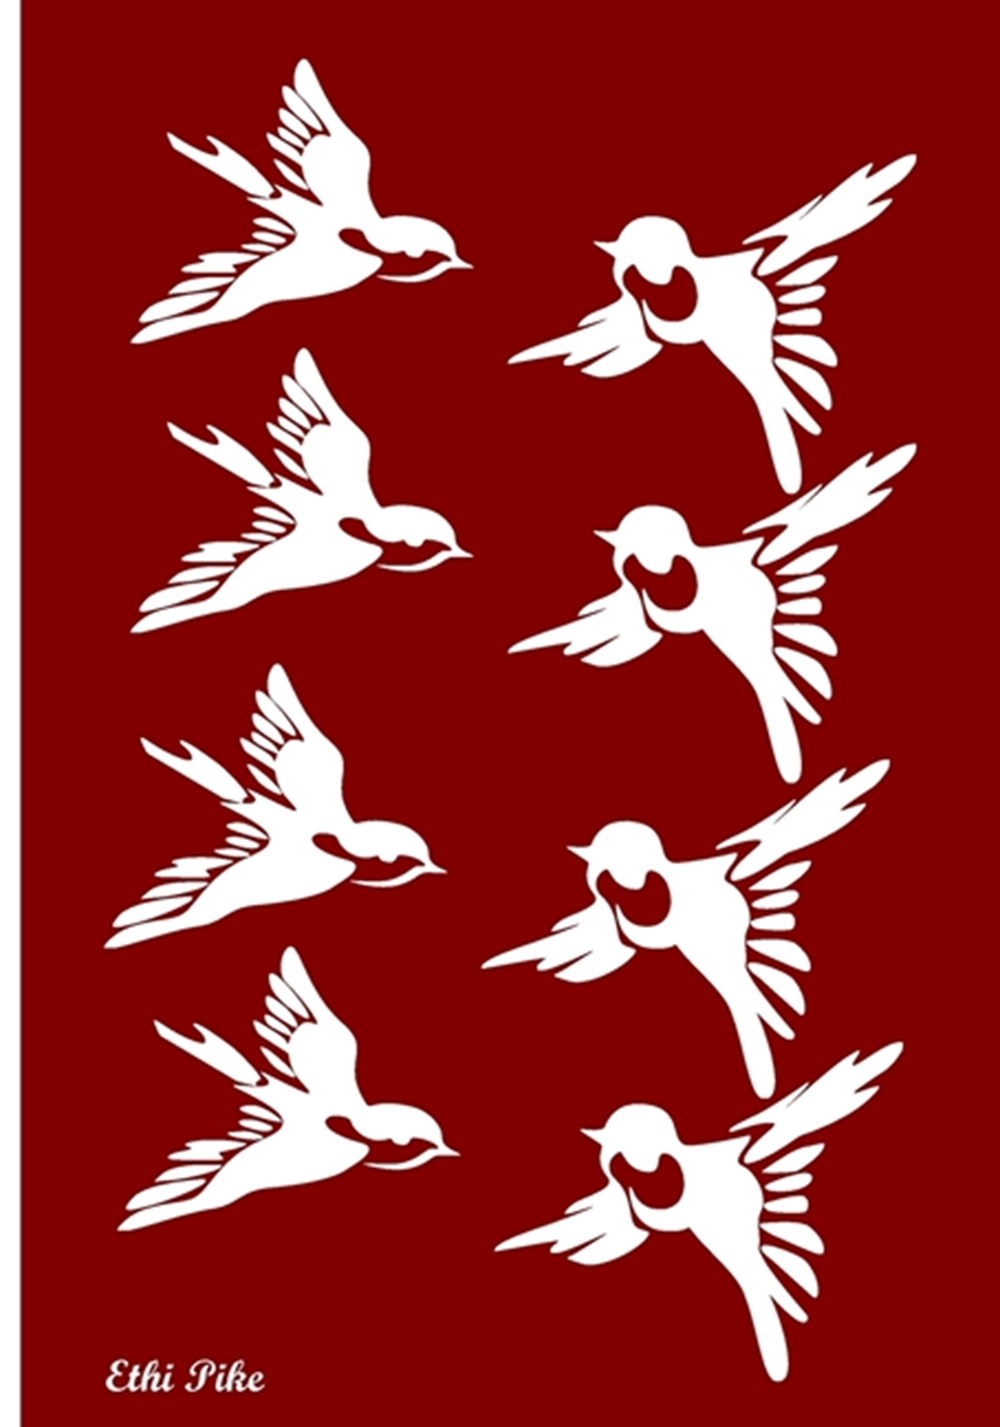 Ethi Pike Birds' Dance (Red)